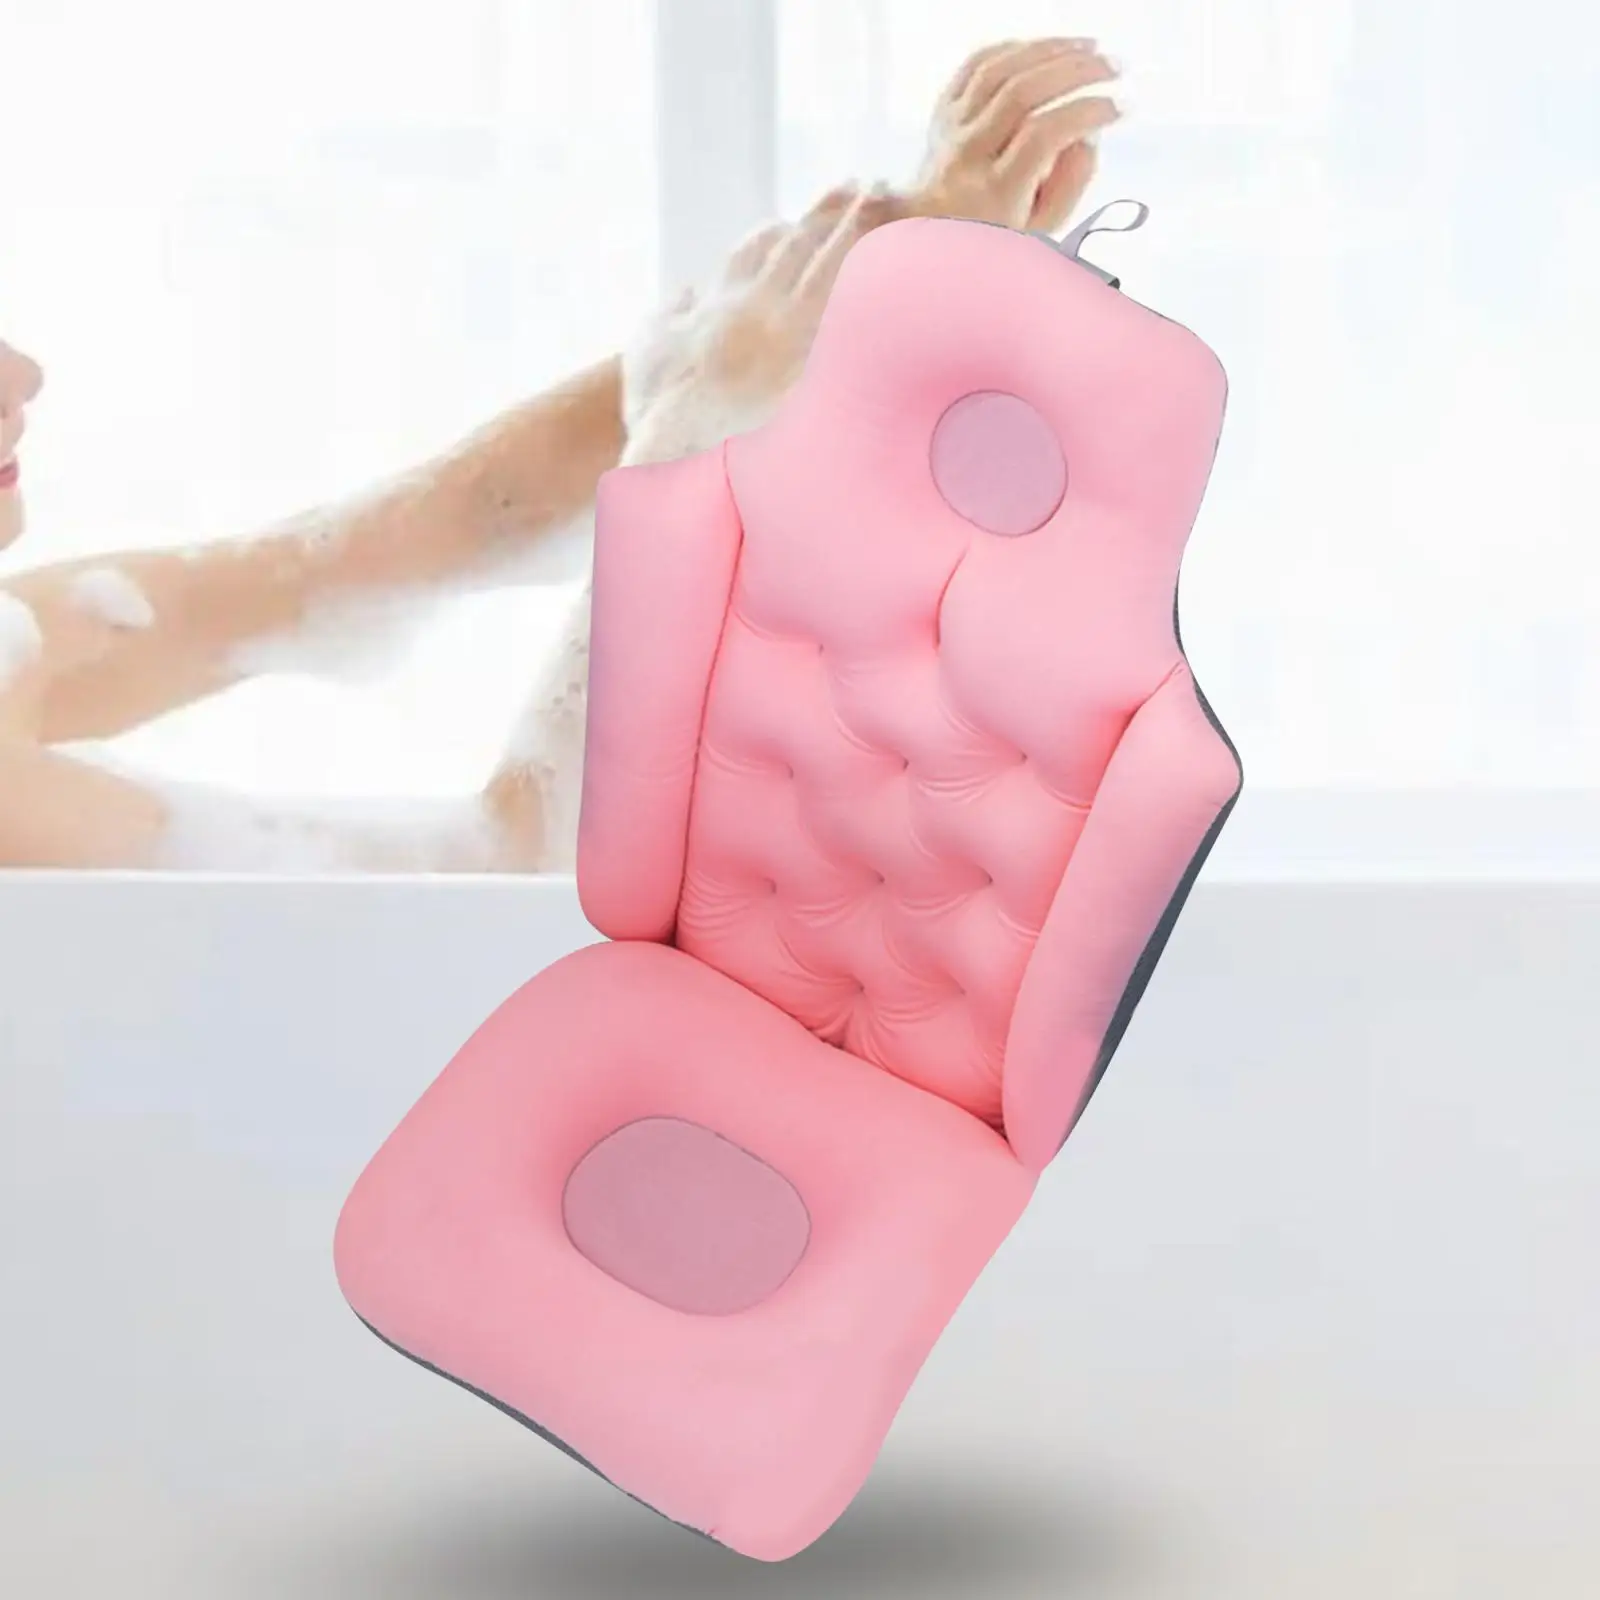 Full Body Bath Pillow Bath Tub Pillows Rest Nonslip Ergonomic Mat for Adults